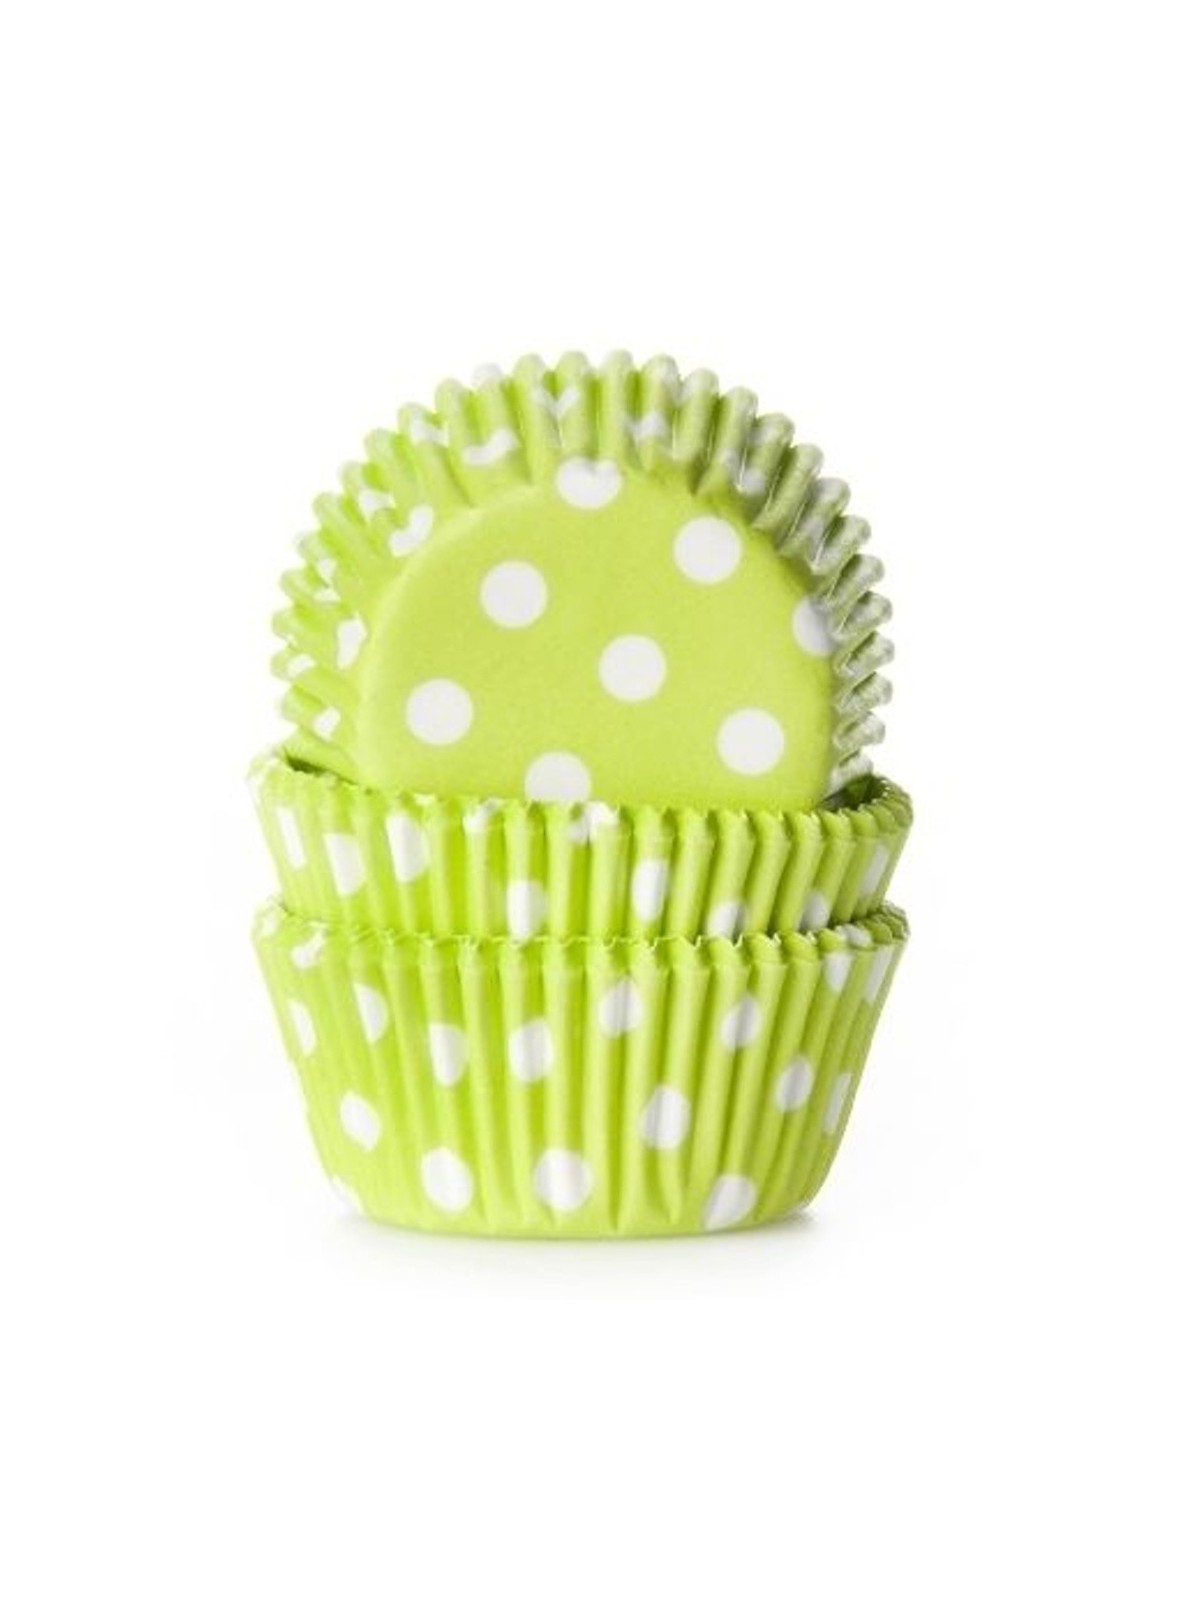 House of Marie mini Baking Cups - Lime - polka dots - 60pcs